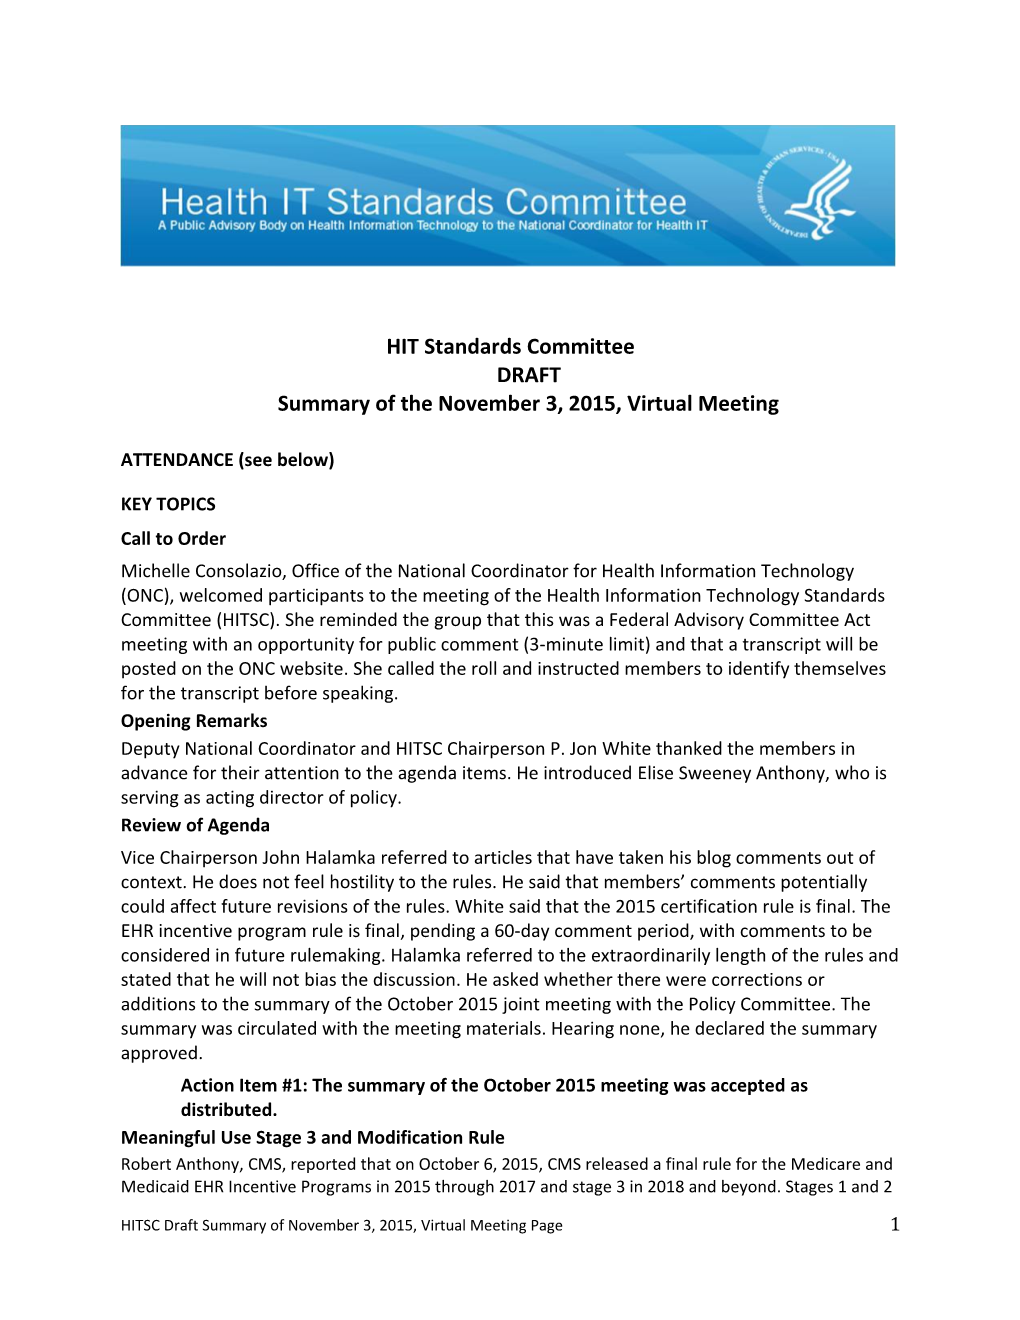 HIT Standards Committeedraftsummary of the November 3, 2015,Virtual Meeting